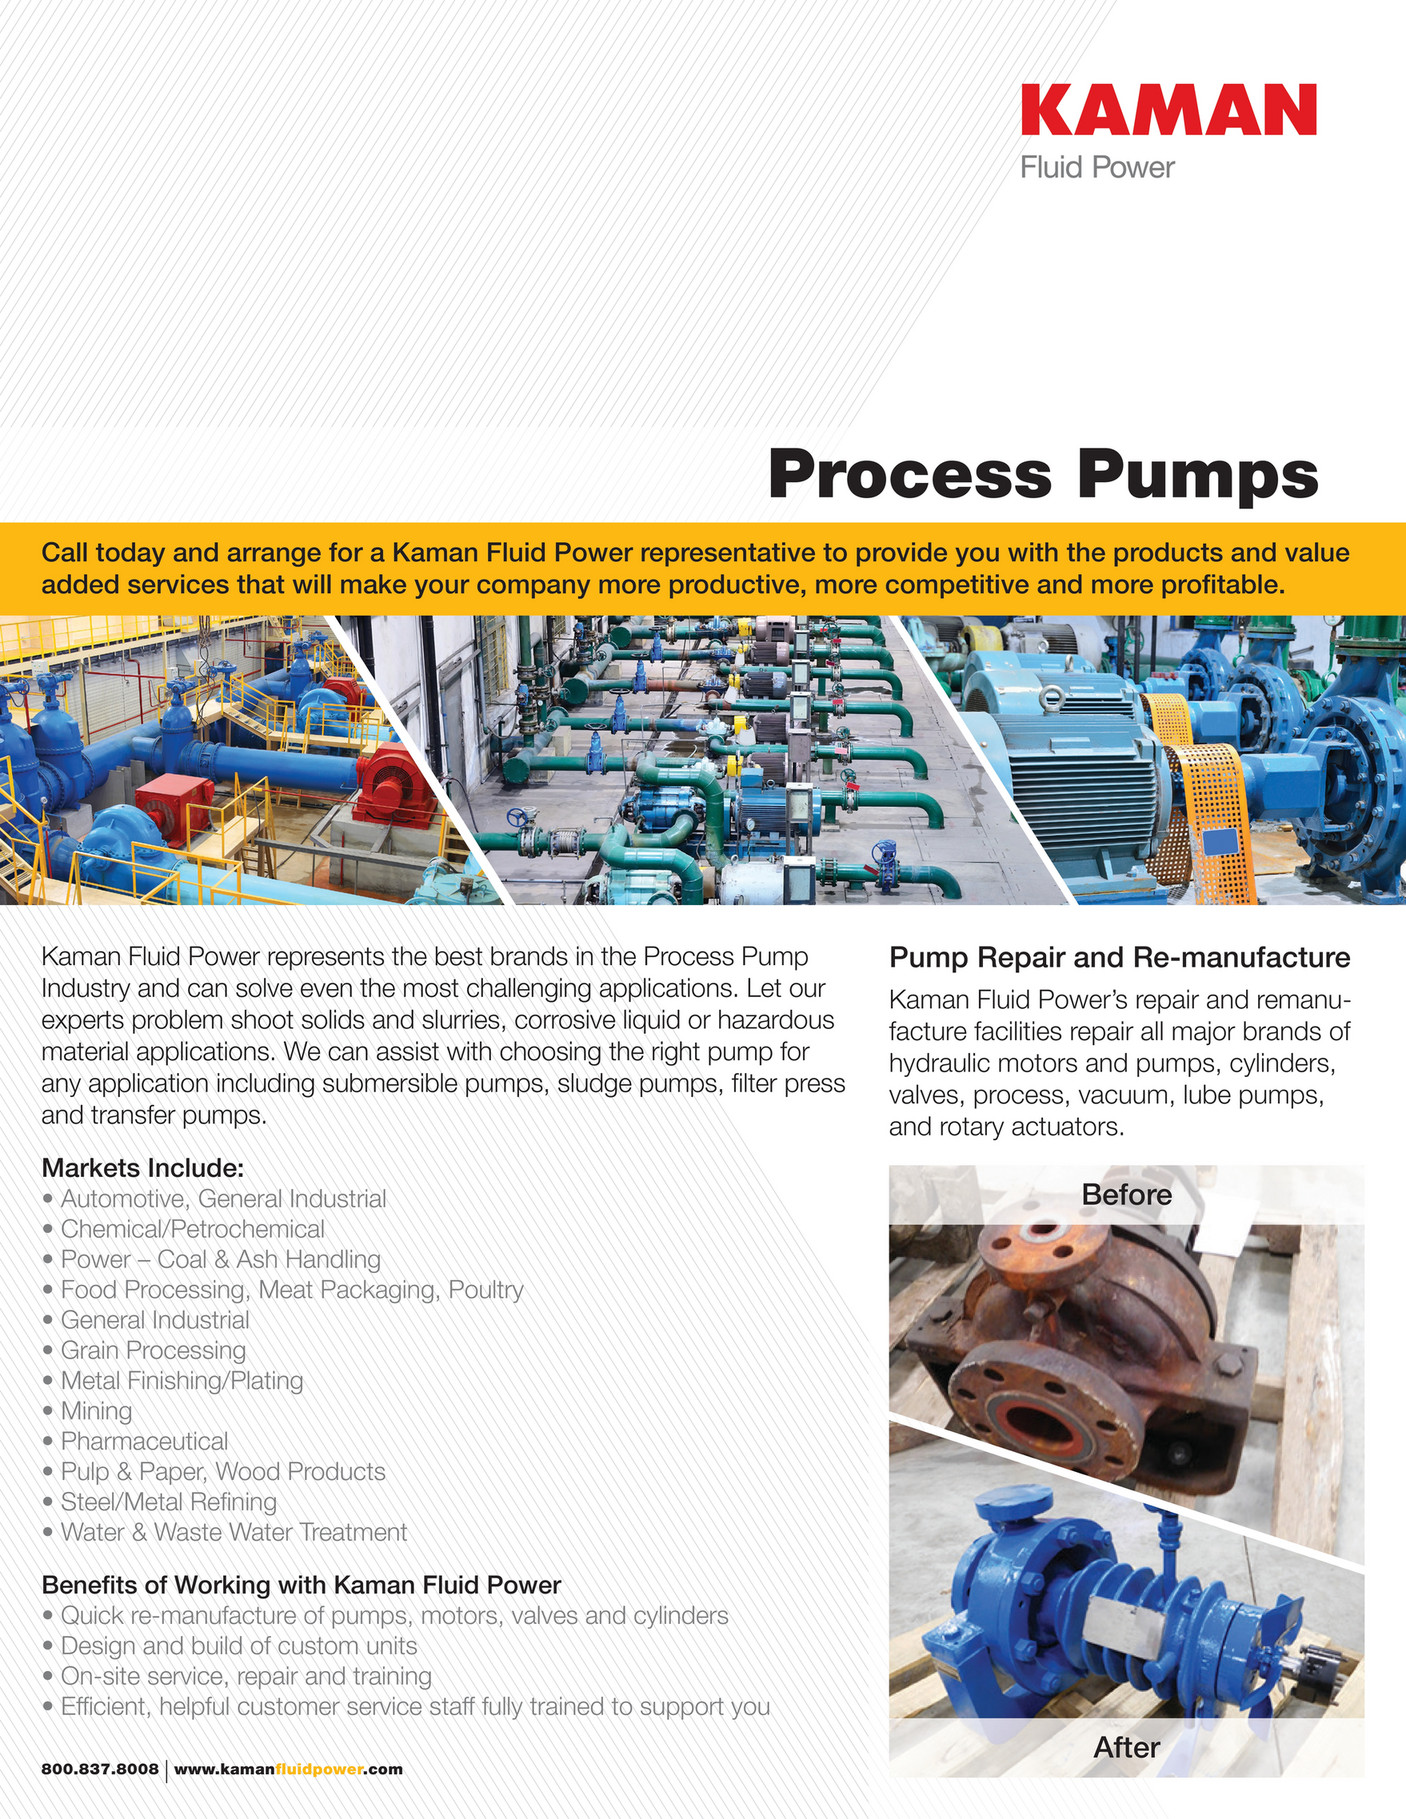 Motion - Kaman Fluid Power Process Pumps - Page 1